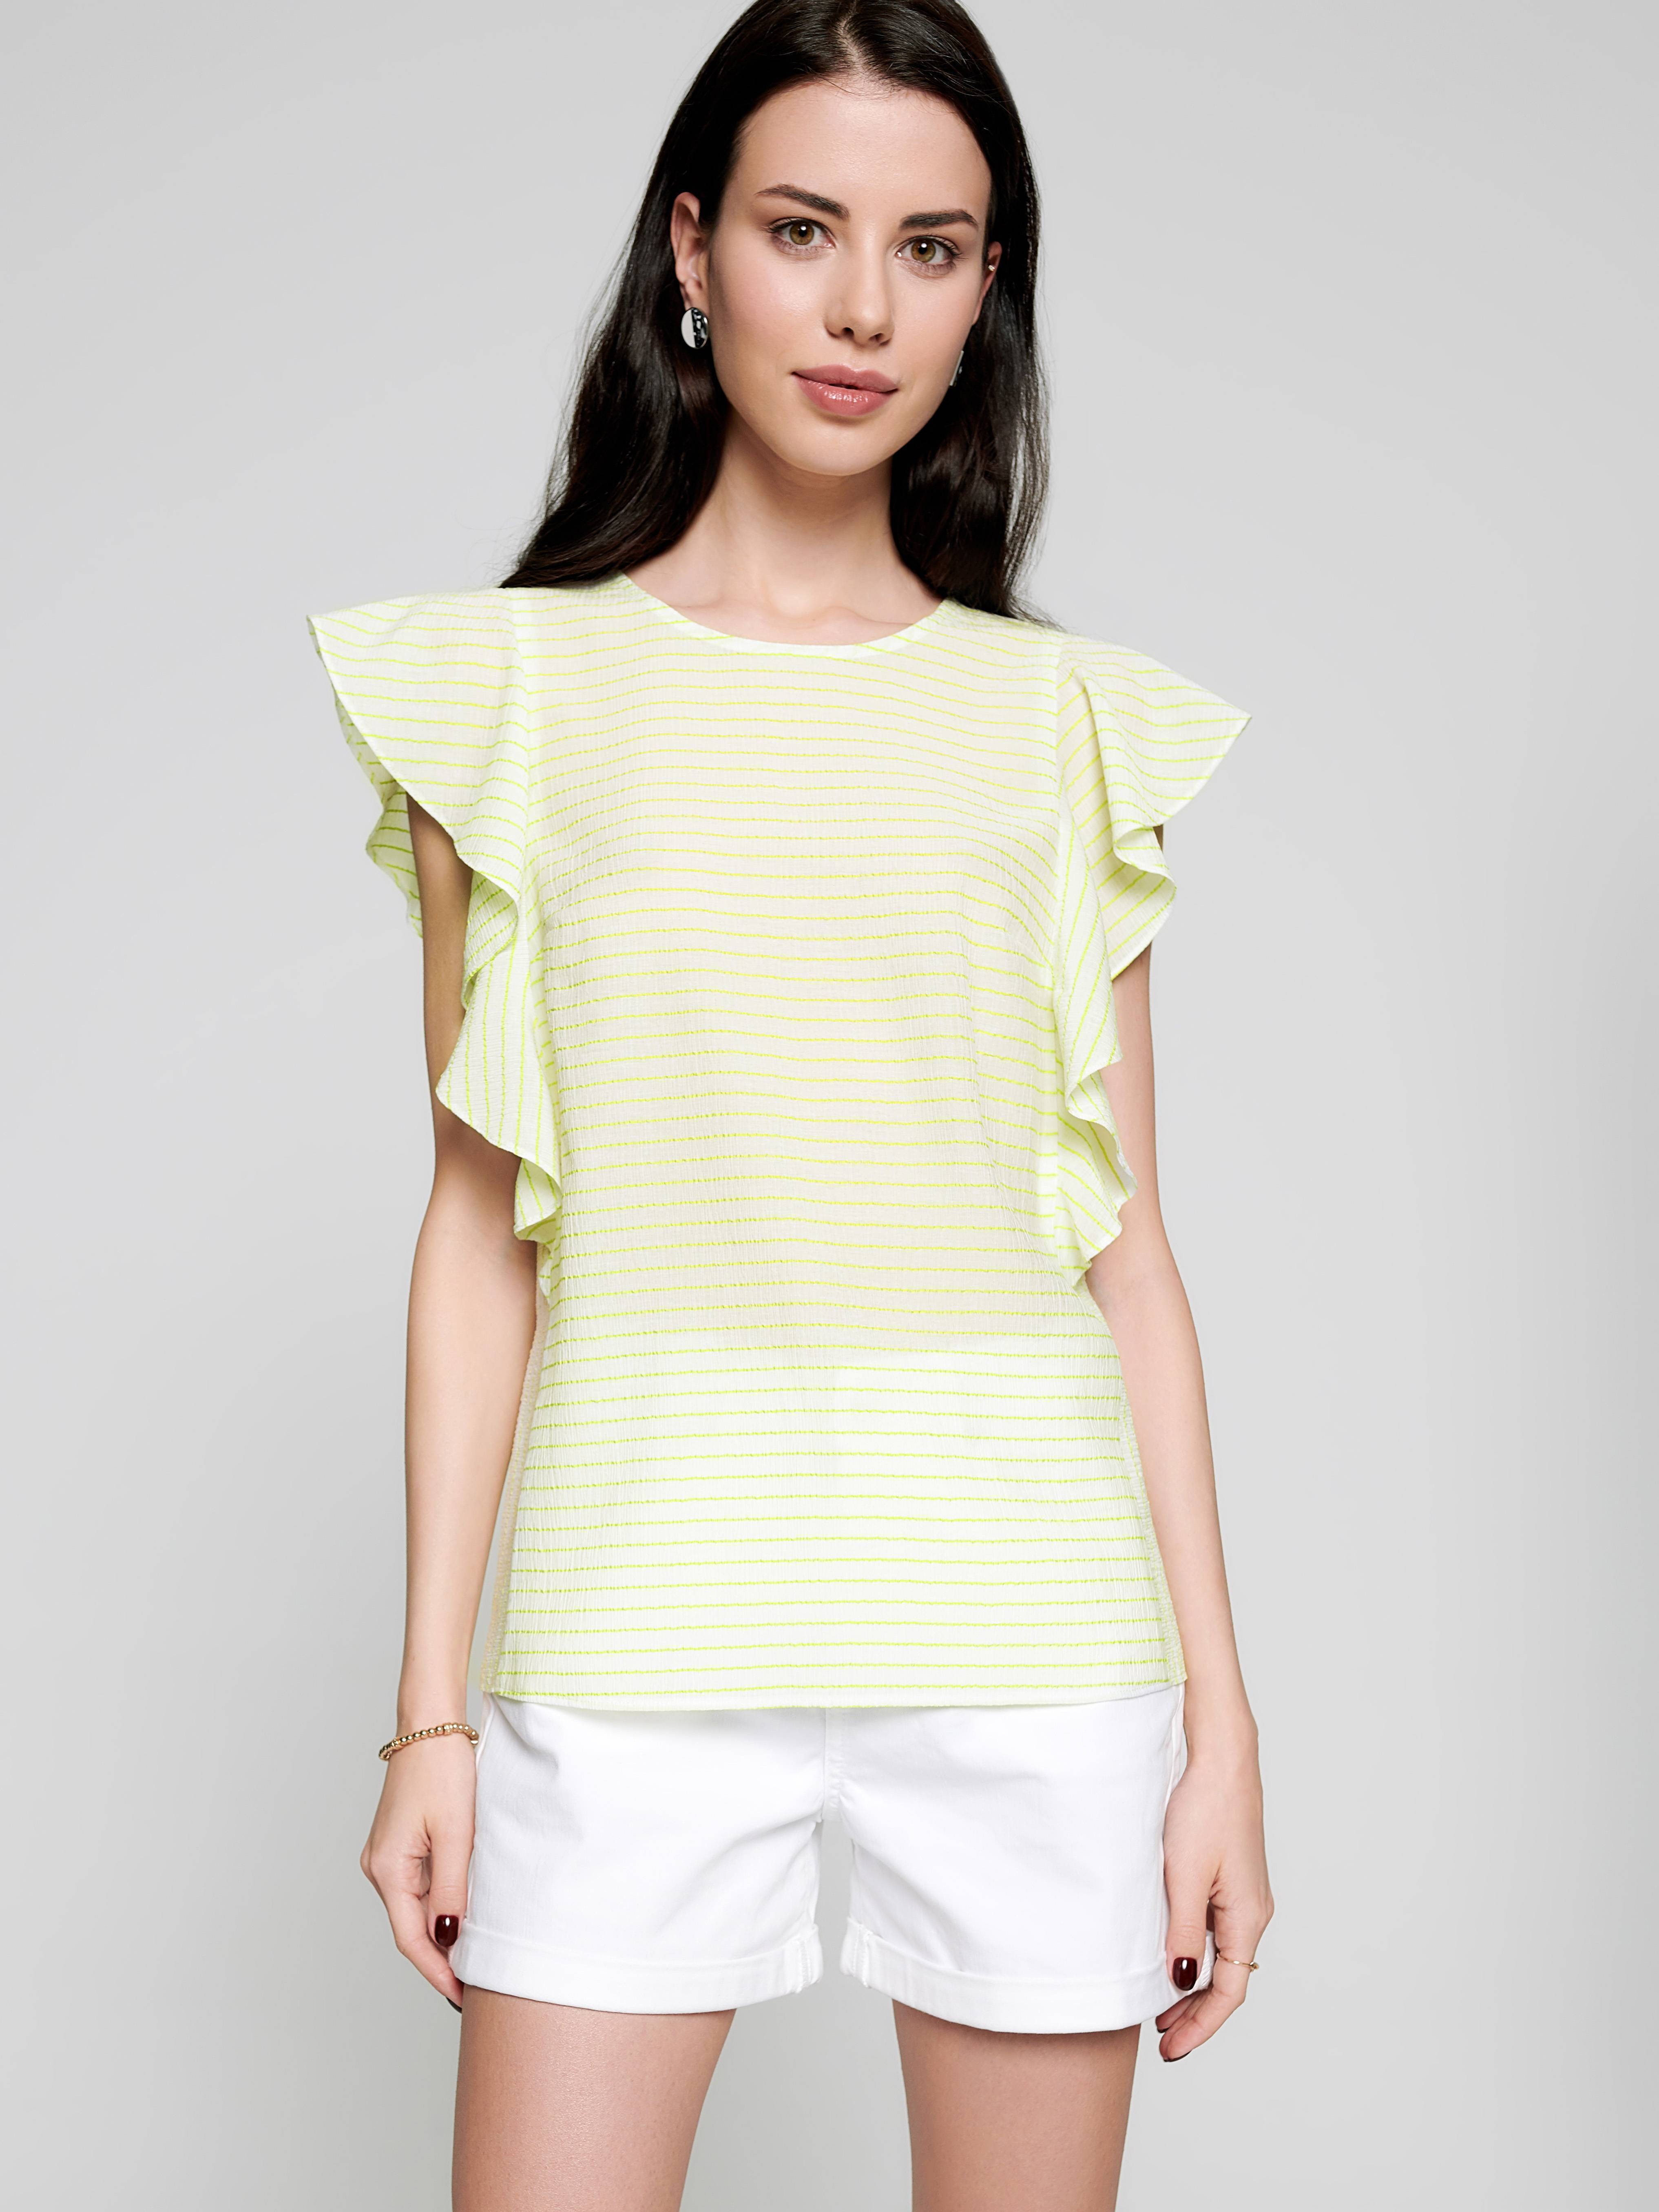 Блузка в полоску с широкими воланами LBL 1093 Conte ⭐️, цвет white-neo lime, размер 170-100-106 - фото 1